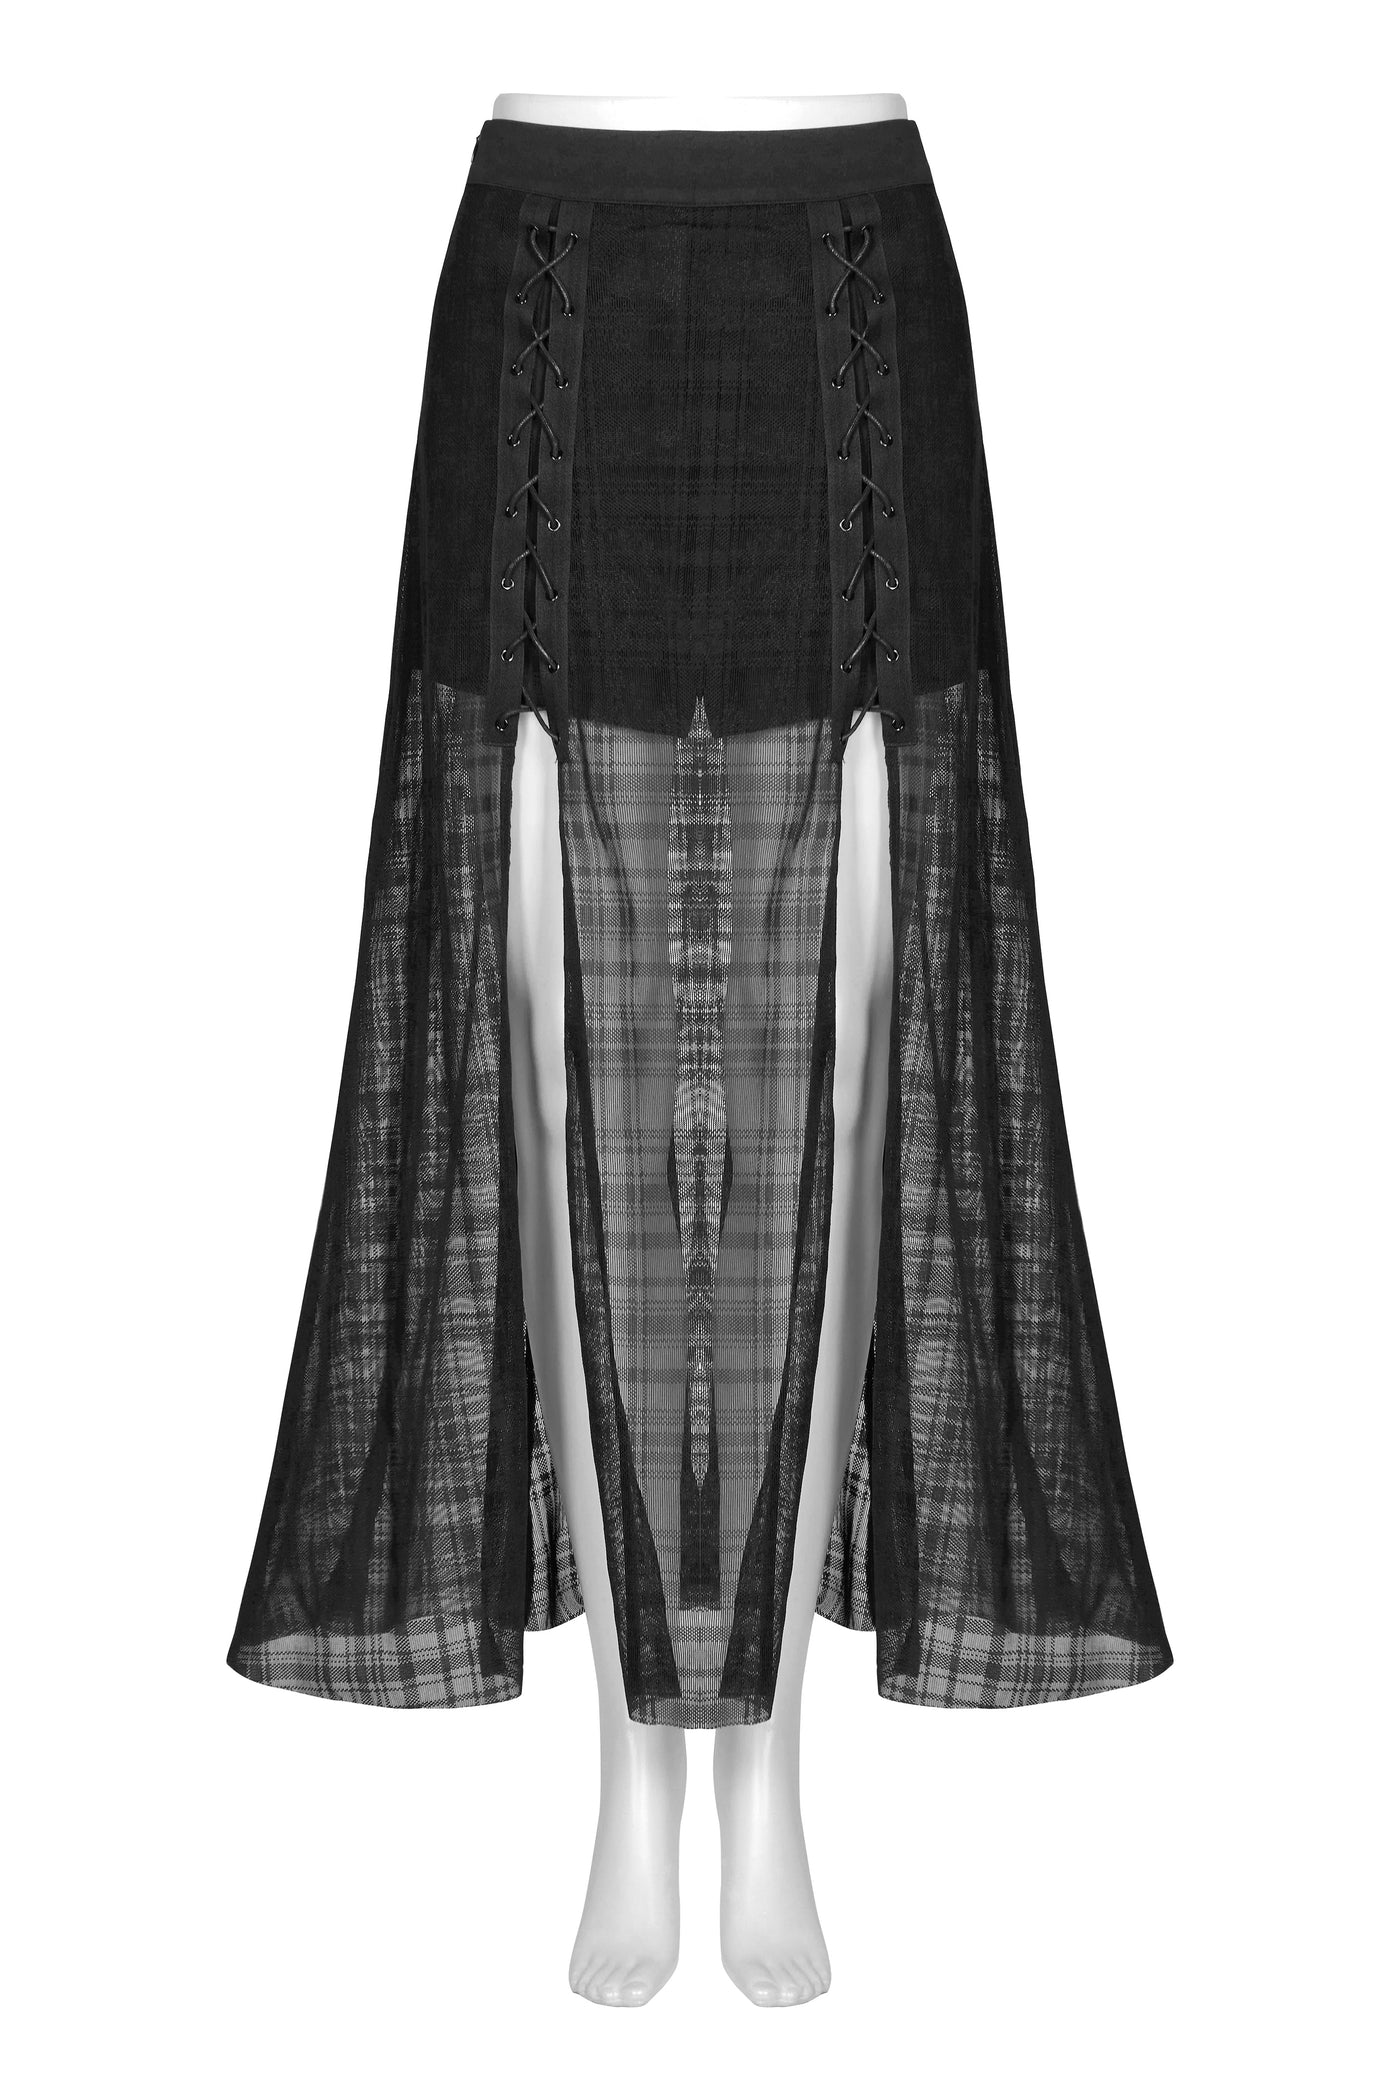 The Durukti Skirt